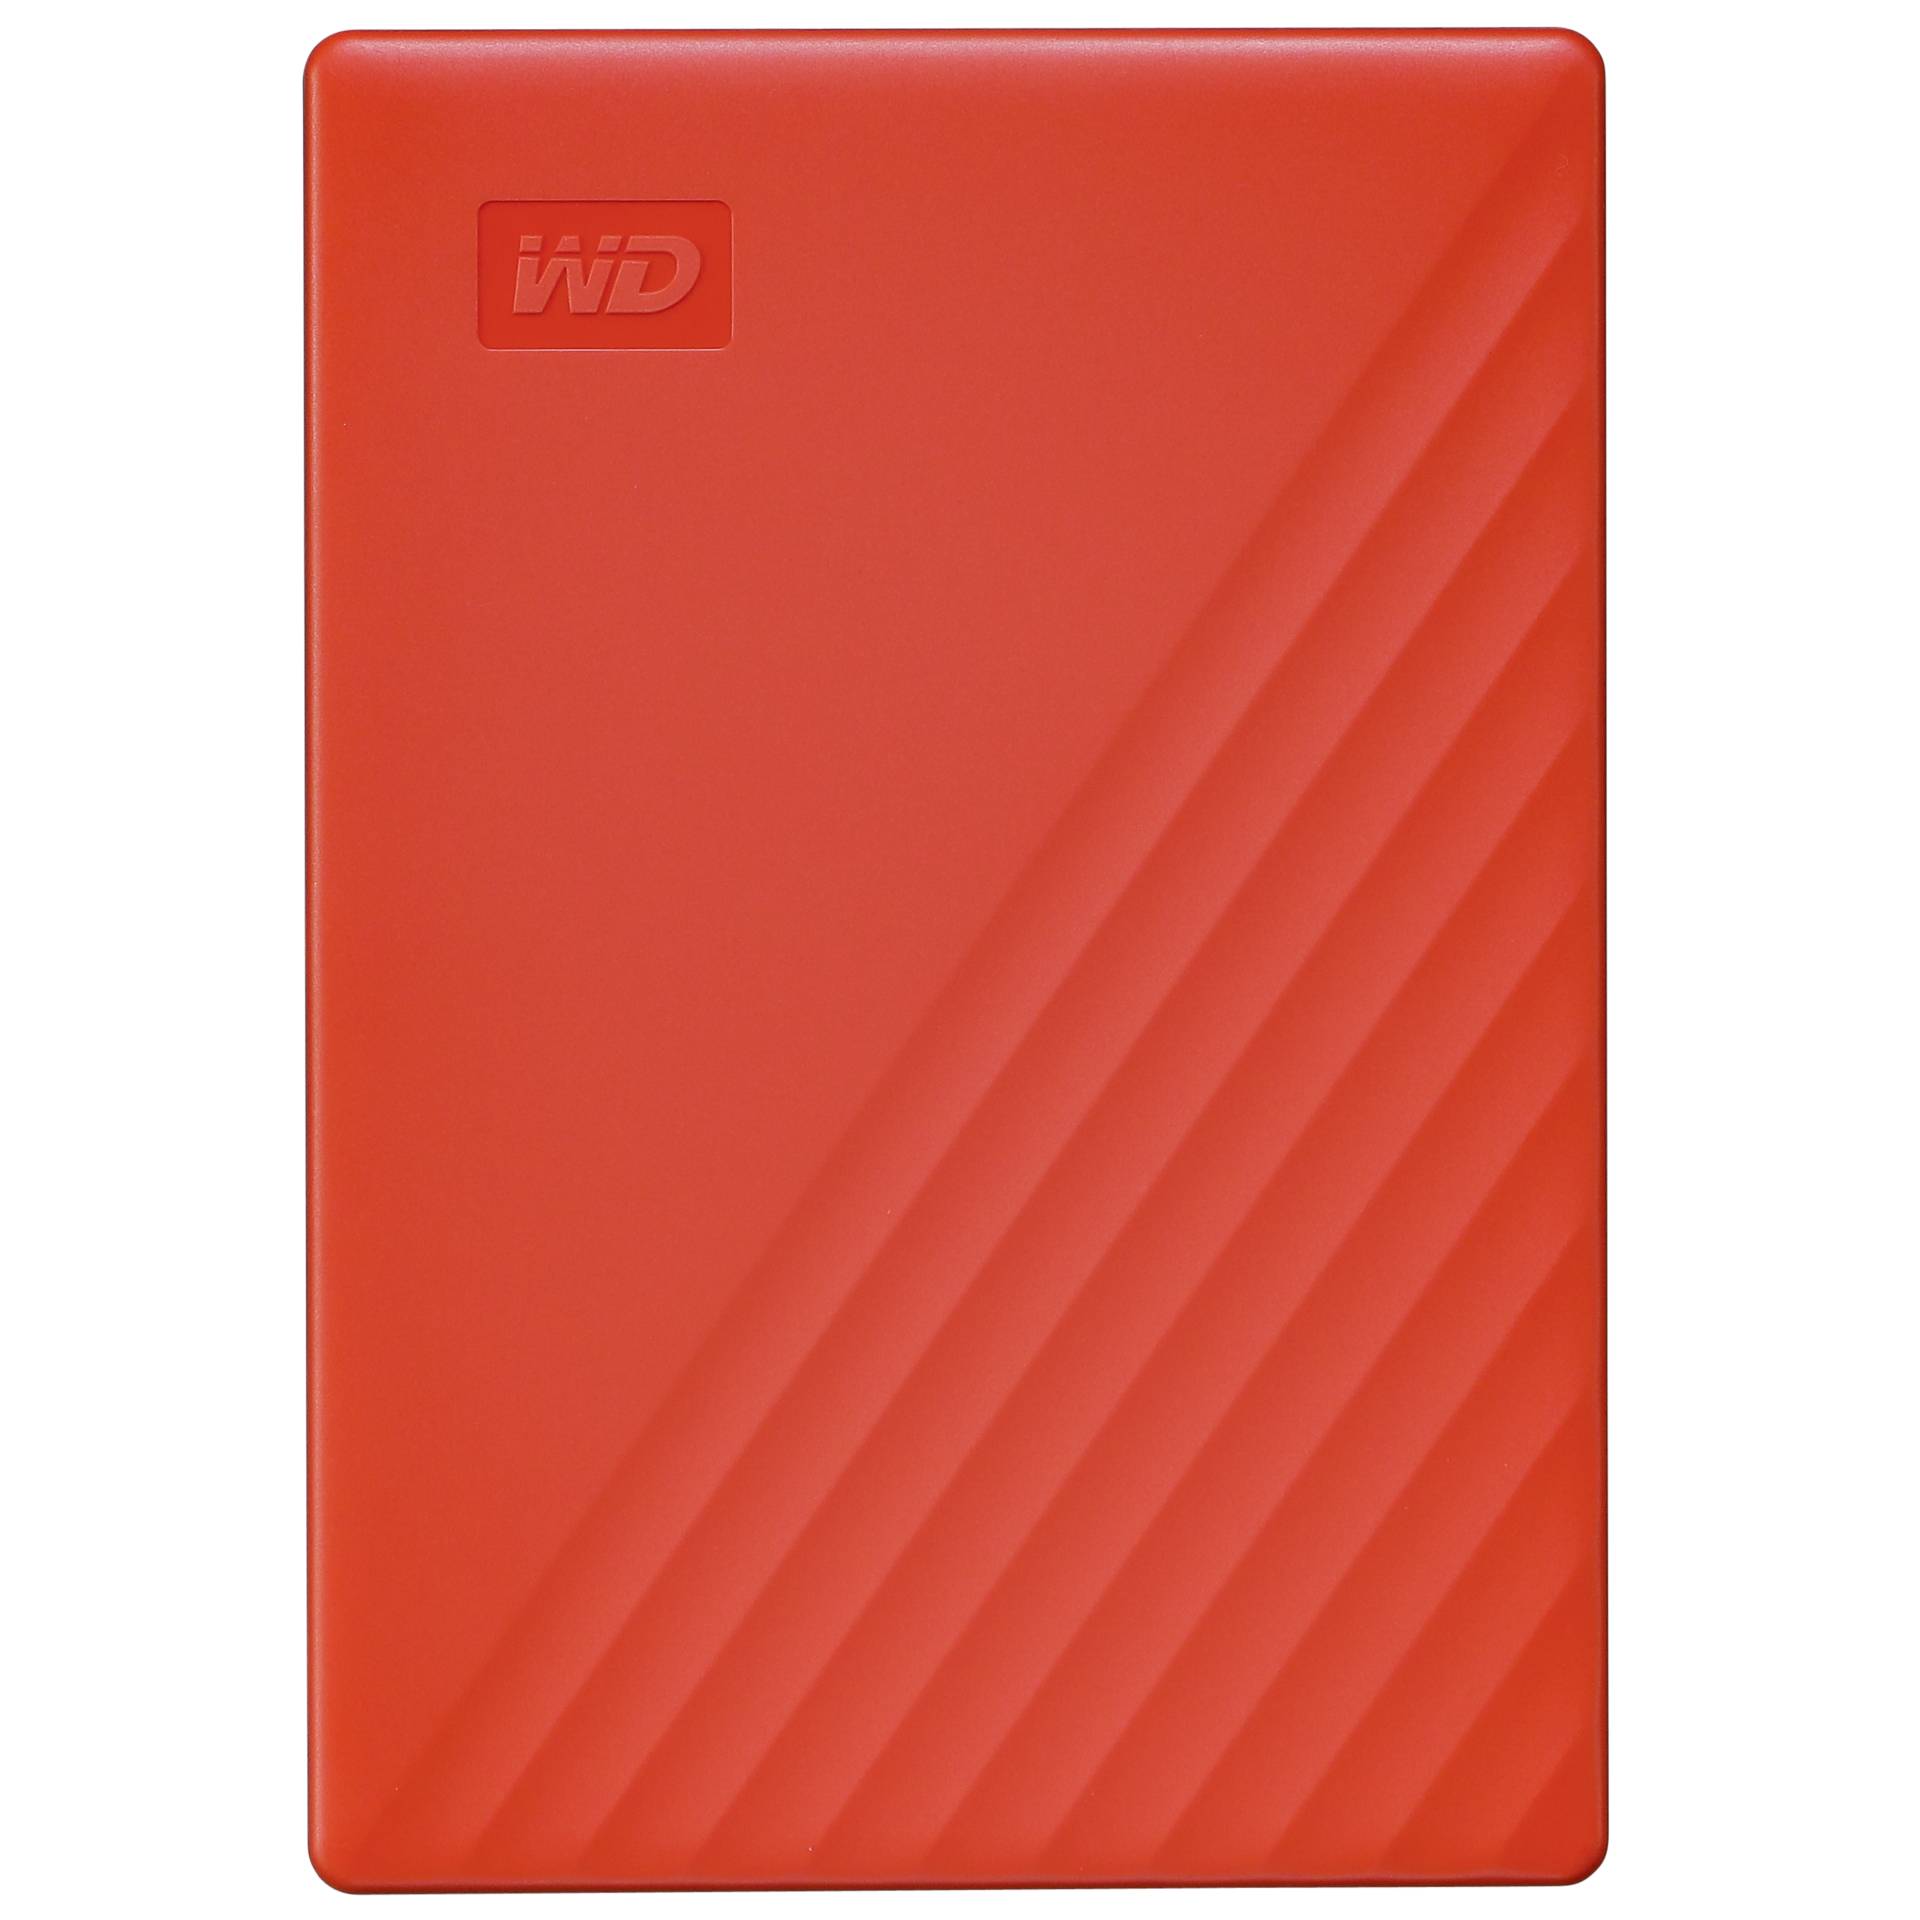 Western Digital My Passport 2TB rosso HDD USB 3.0 nuovo